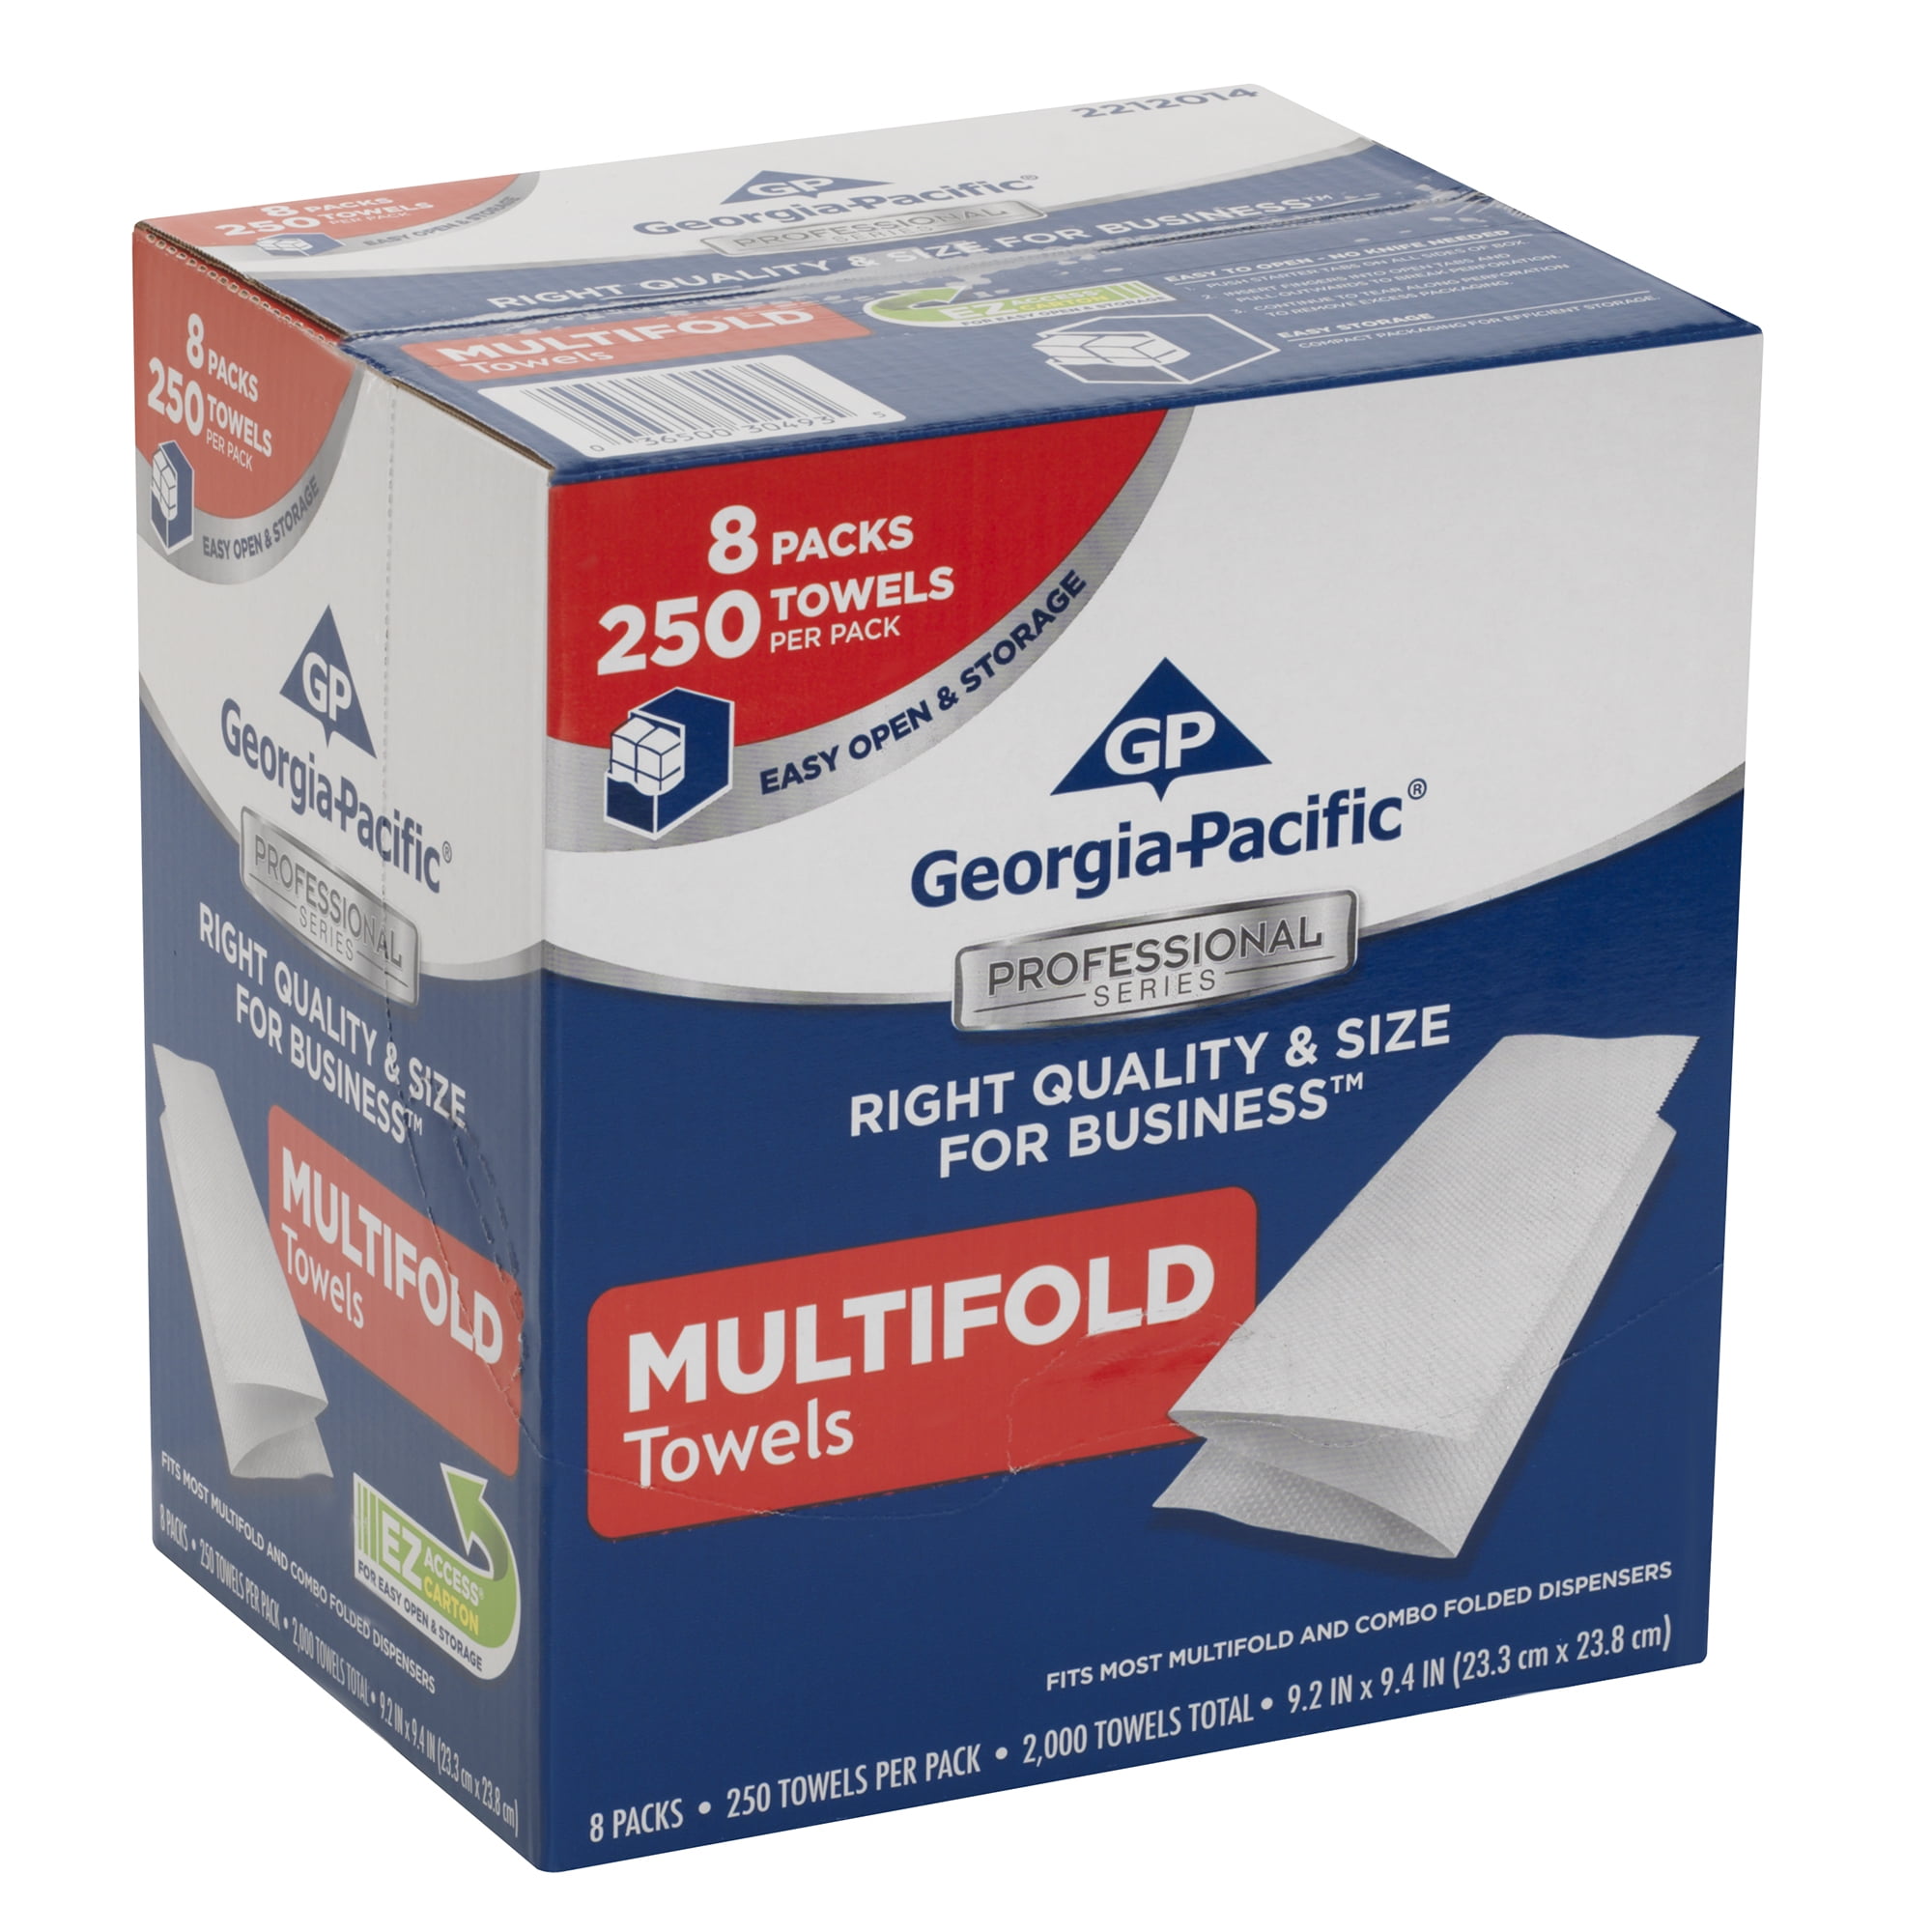 FREE 2 DAY SHIPING! Genuine Joe GJO21120 C-Fold Paper Towels Pack of 2400 